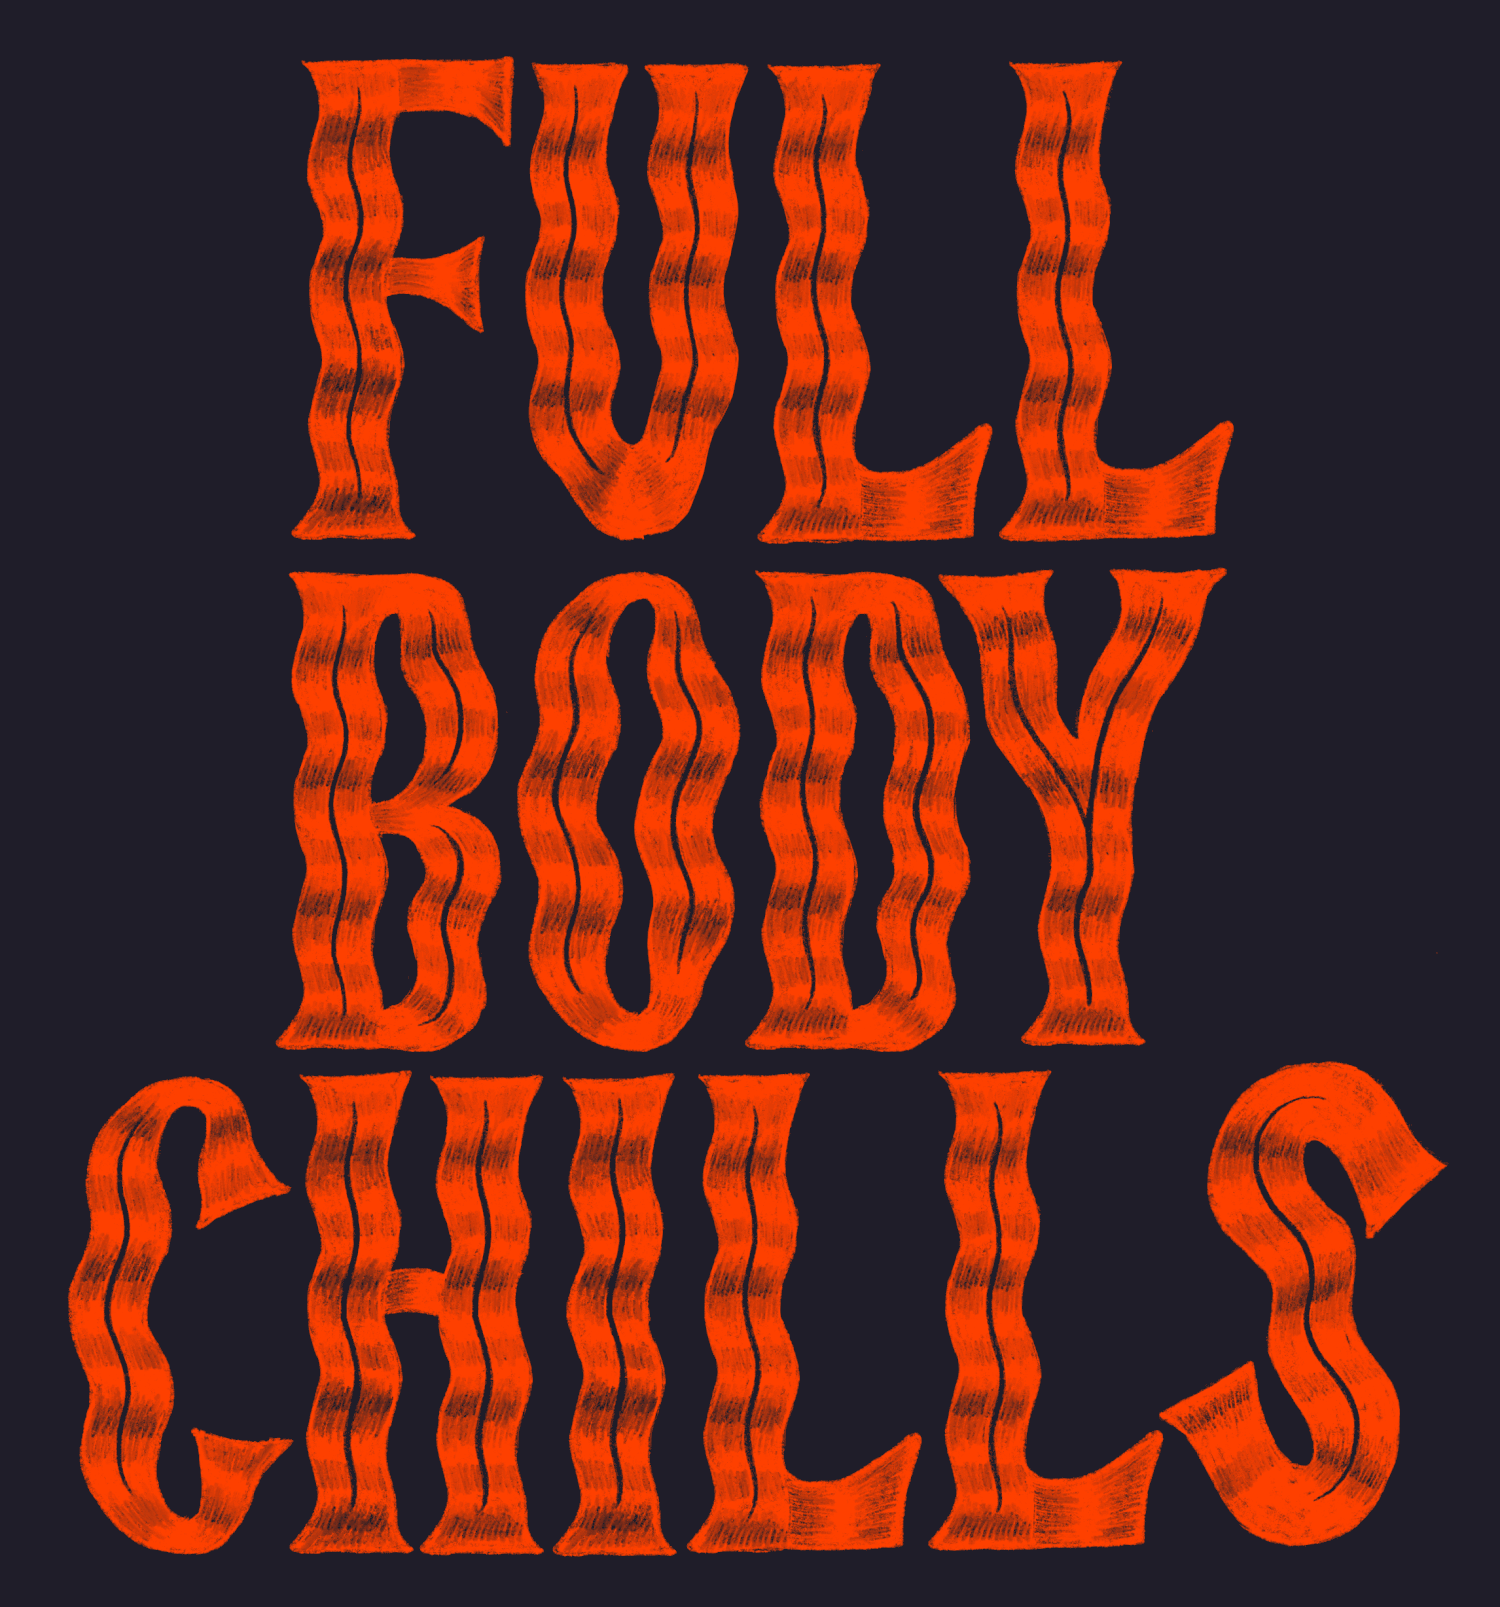 Full Body Chills by Andrea Rochelle